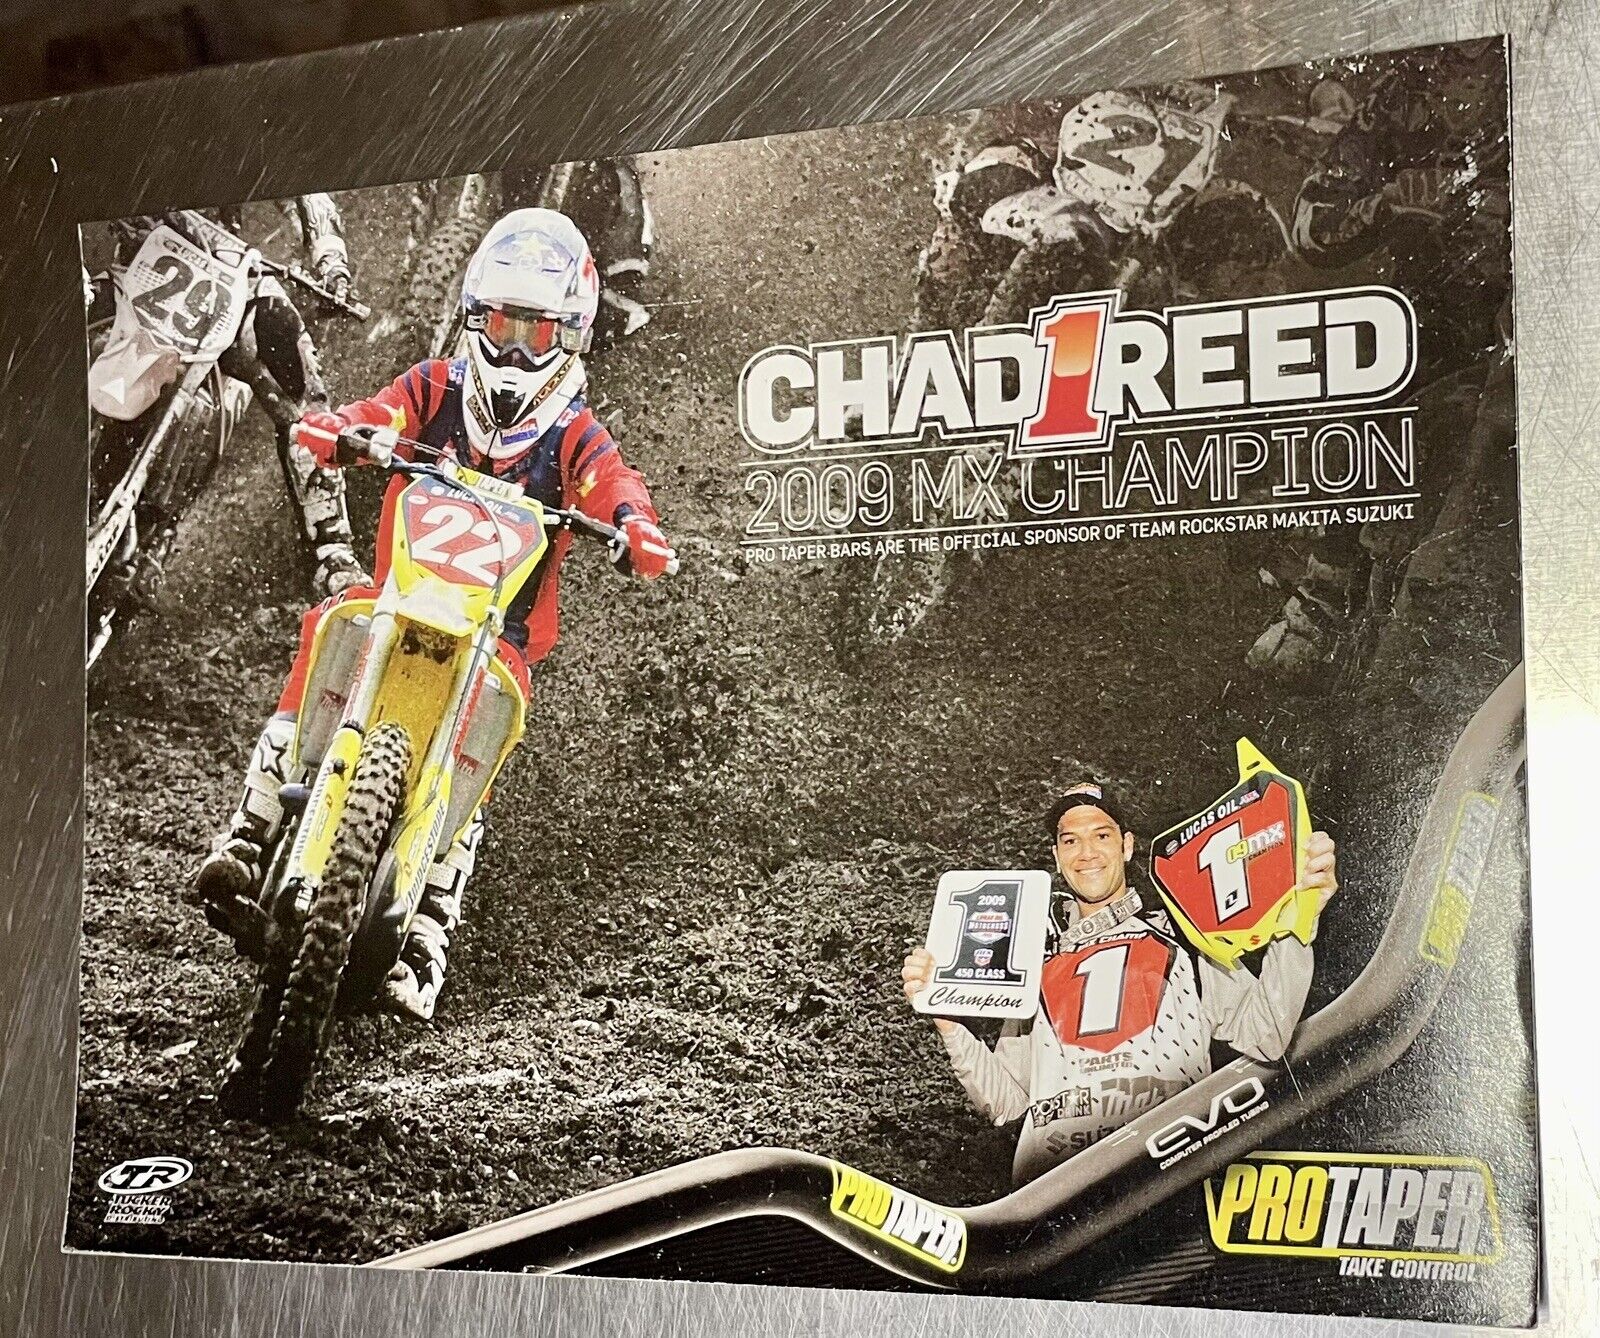 2009 Champion Chad Reed Suzuki with Pro Taper Bars Print Ad